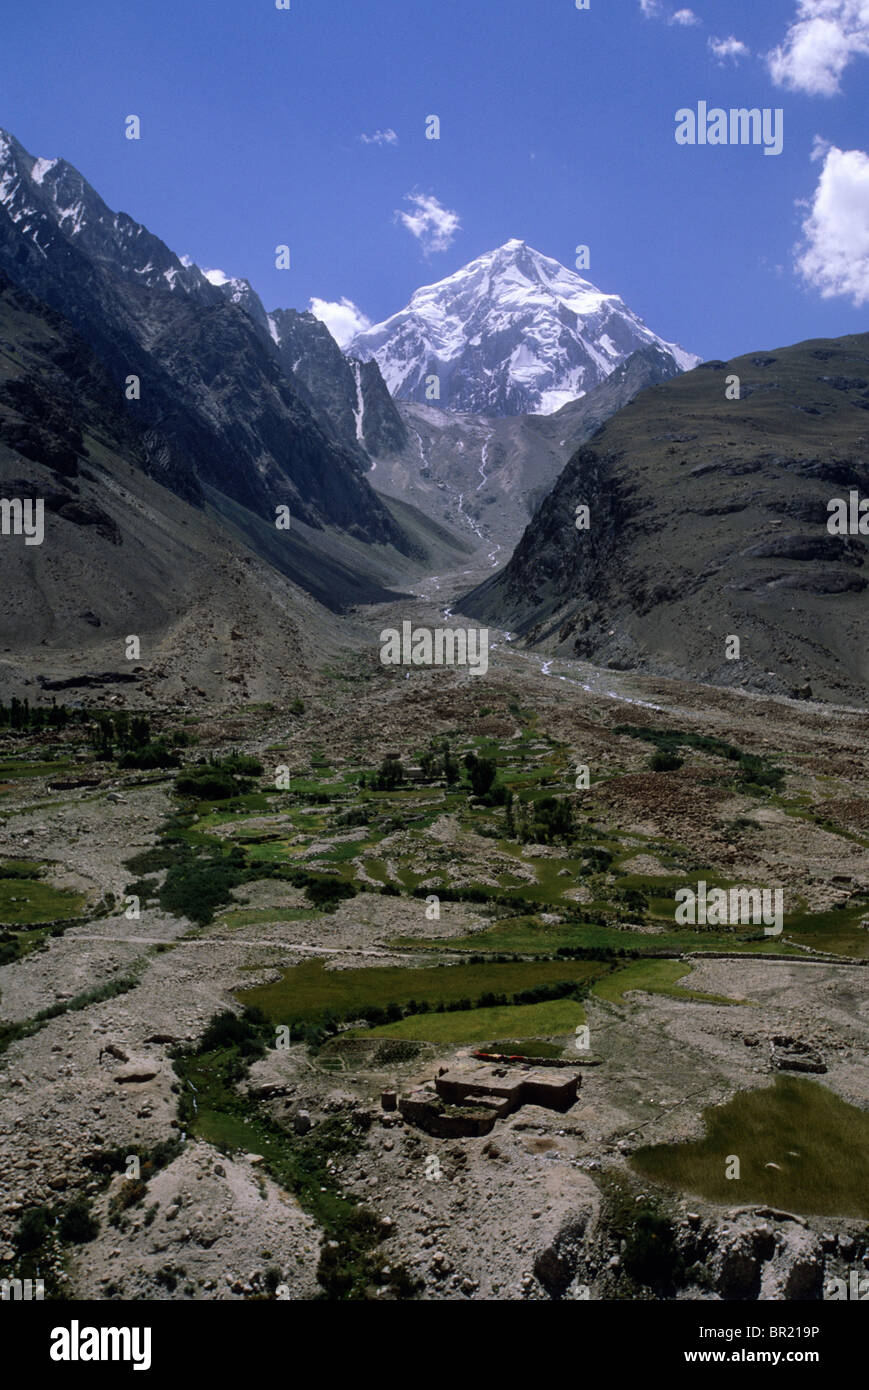 Mountain in Hindu Kush range, Little Pamir, Wakhan, Afghanistan. Stock Photo